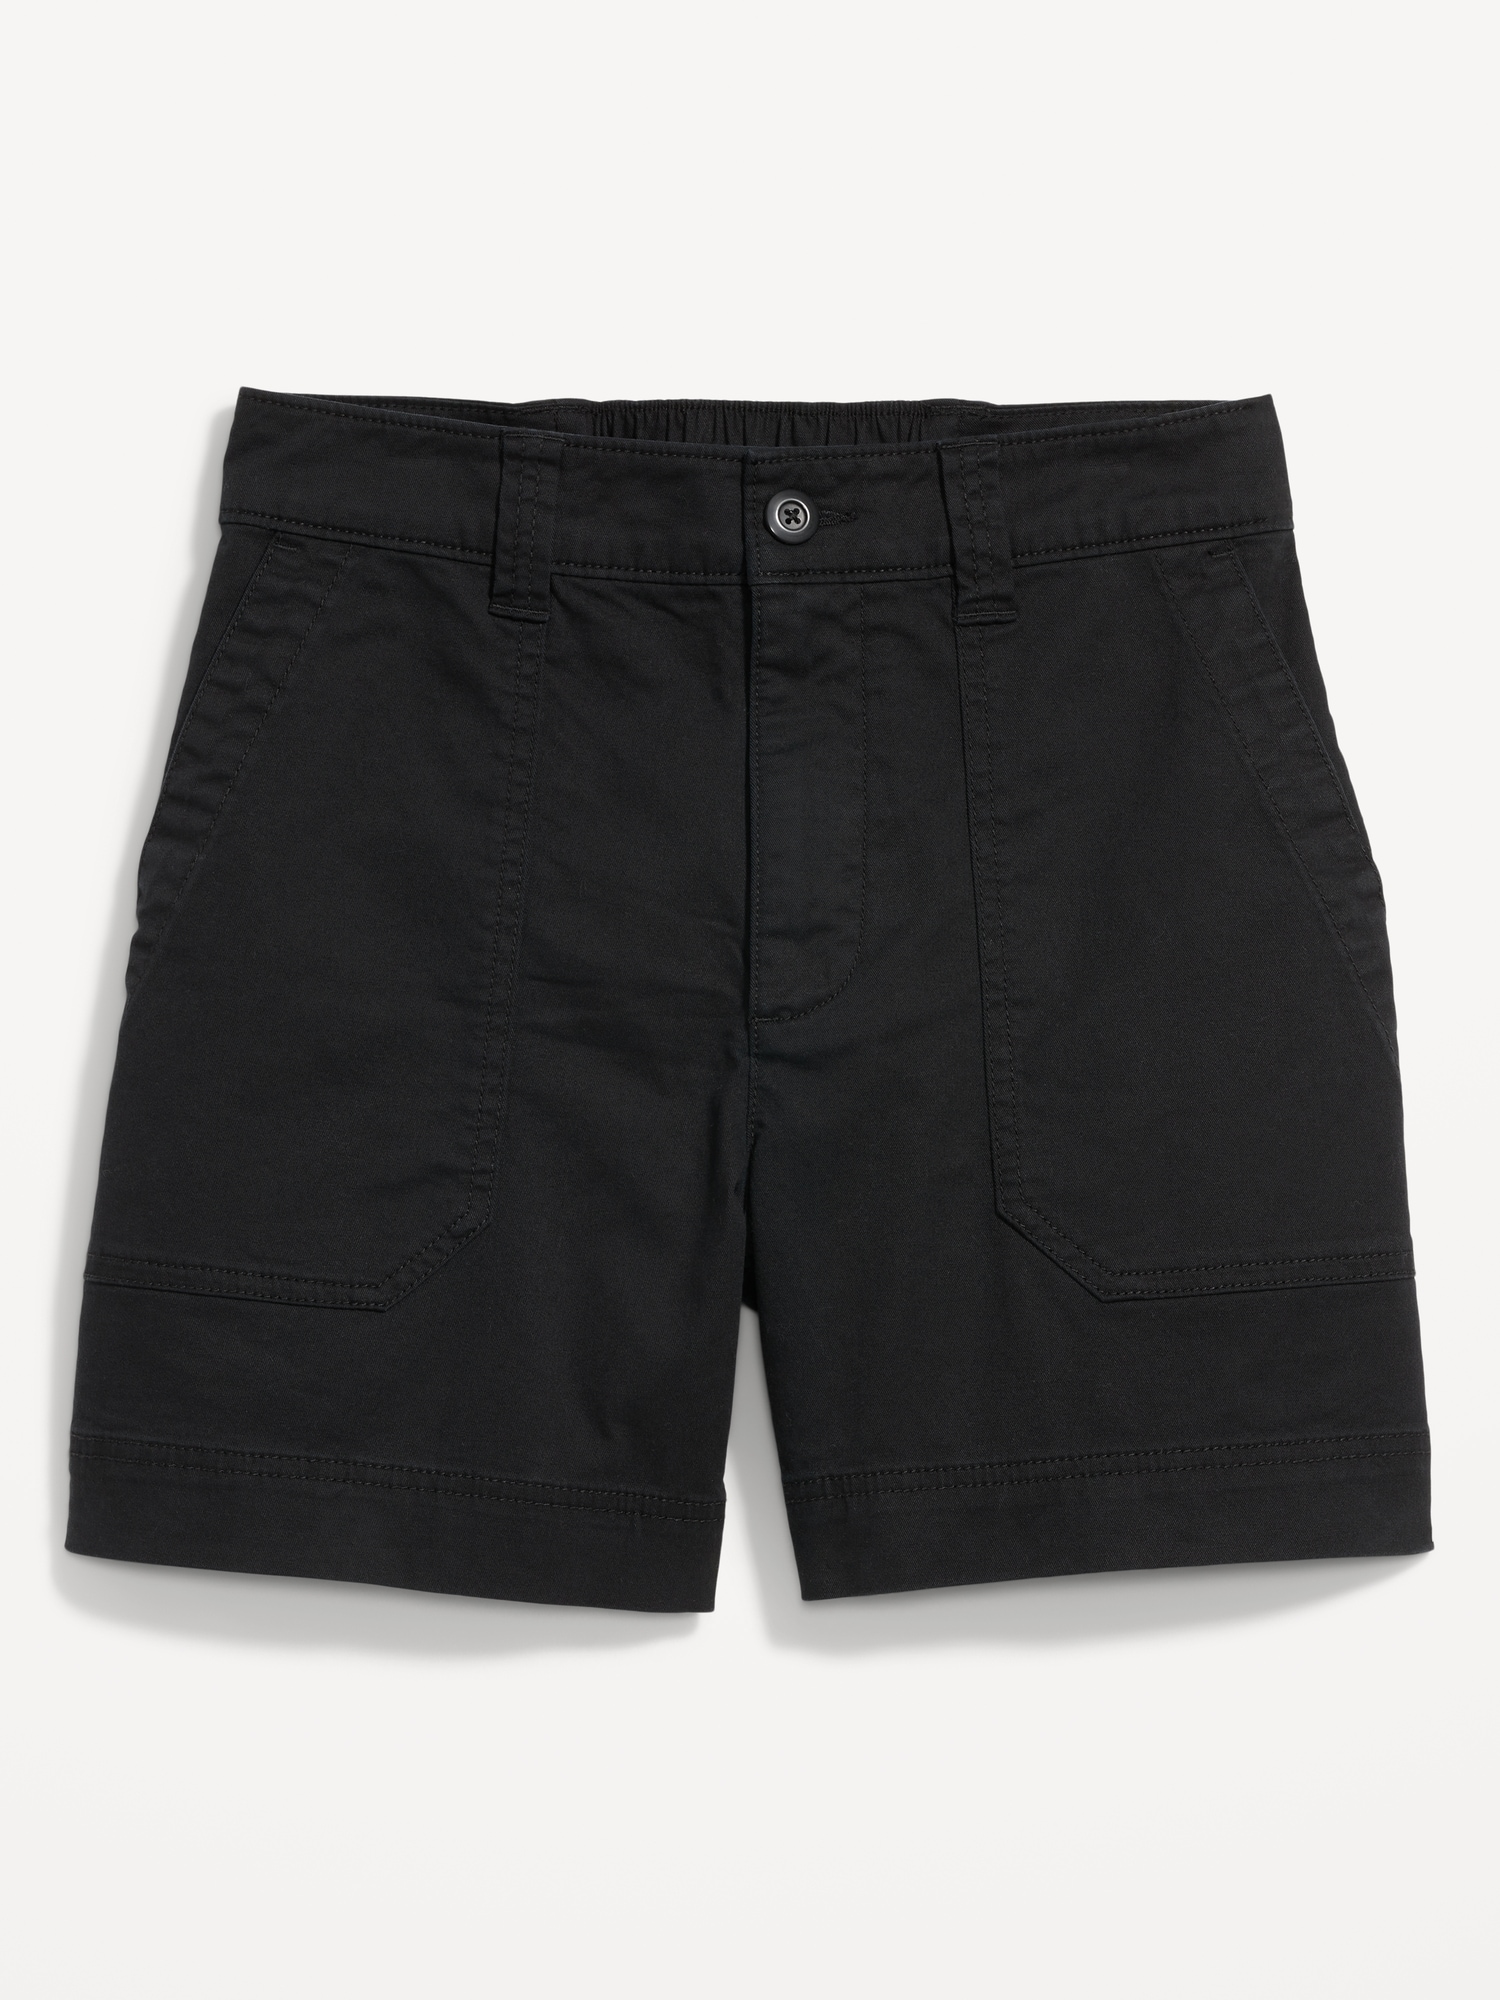 High-Waisted OGC Chino Shorts -- 5-inch inseam